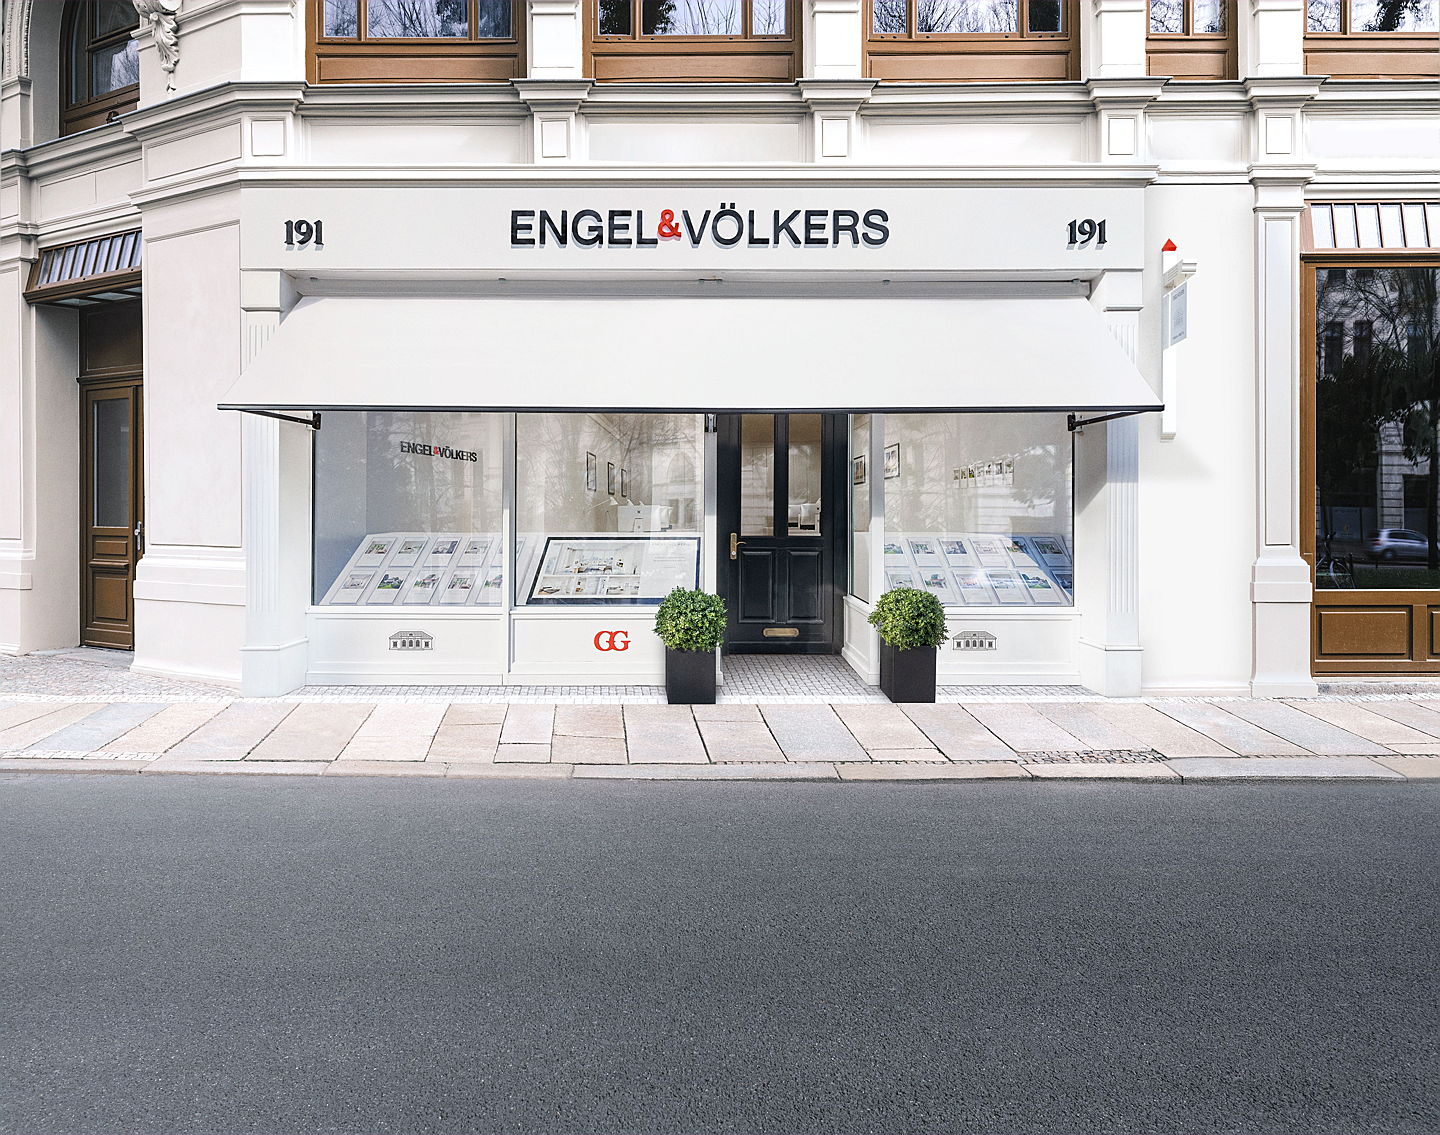  Hamburg
- Engel & Völkers Expansion